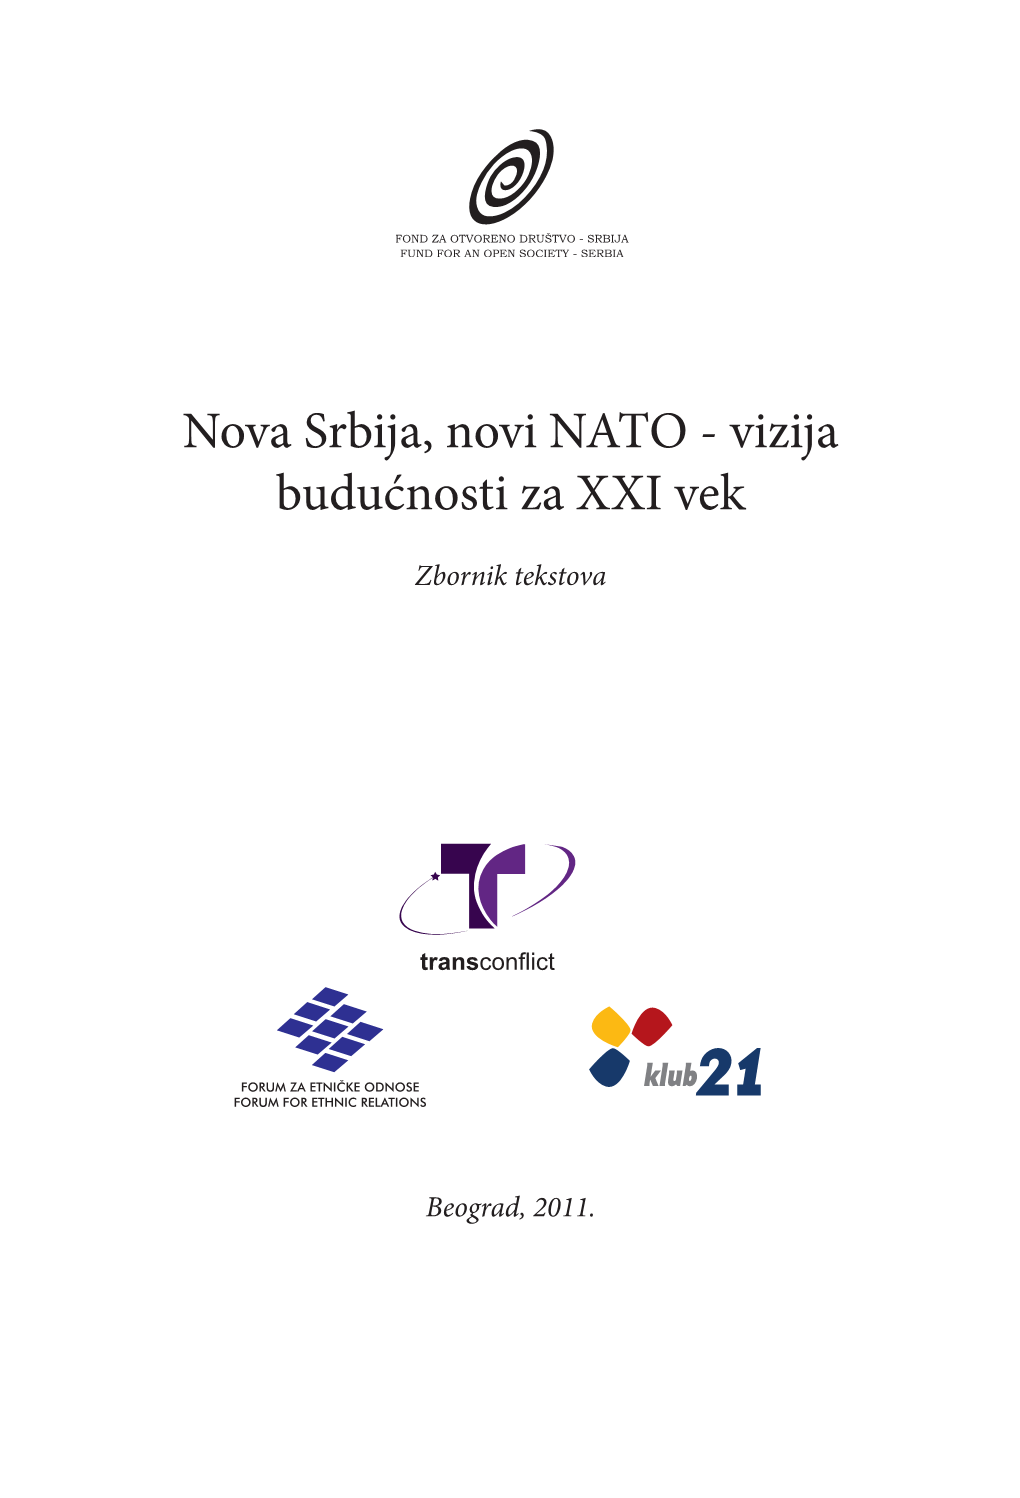 Nova Srbija, Novi NATO - Vizija Budućnosti Za XXI Vek